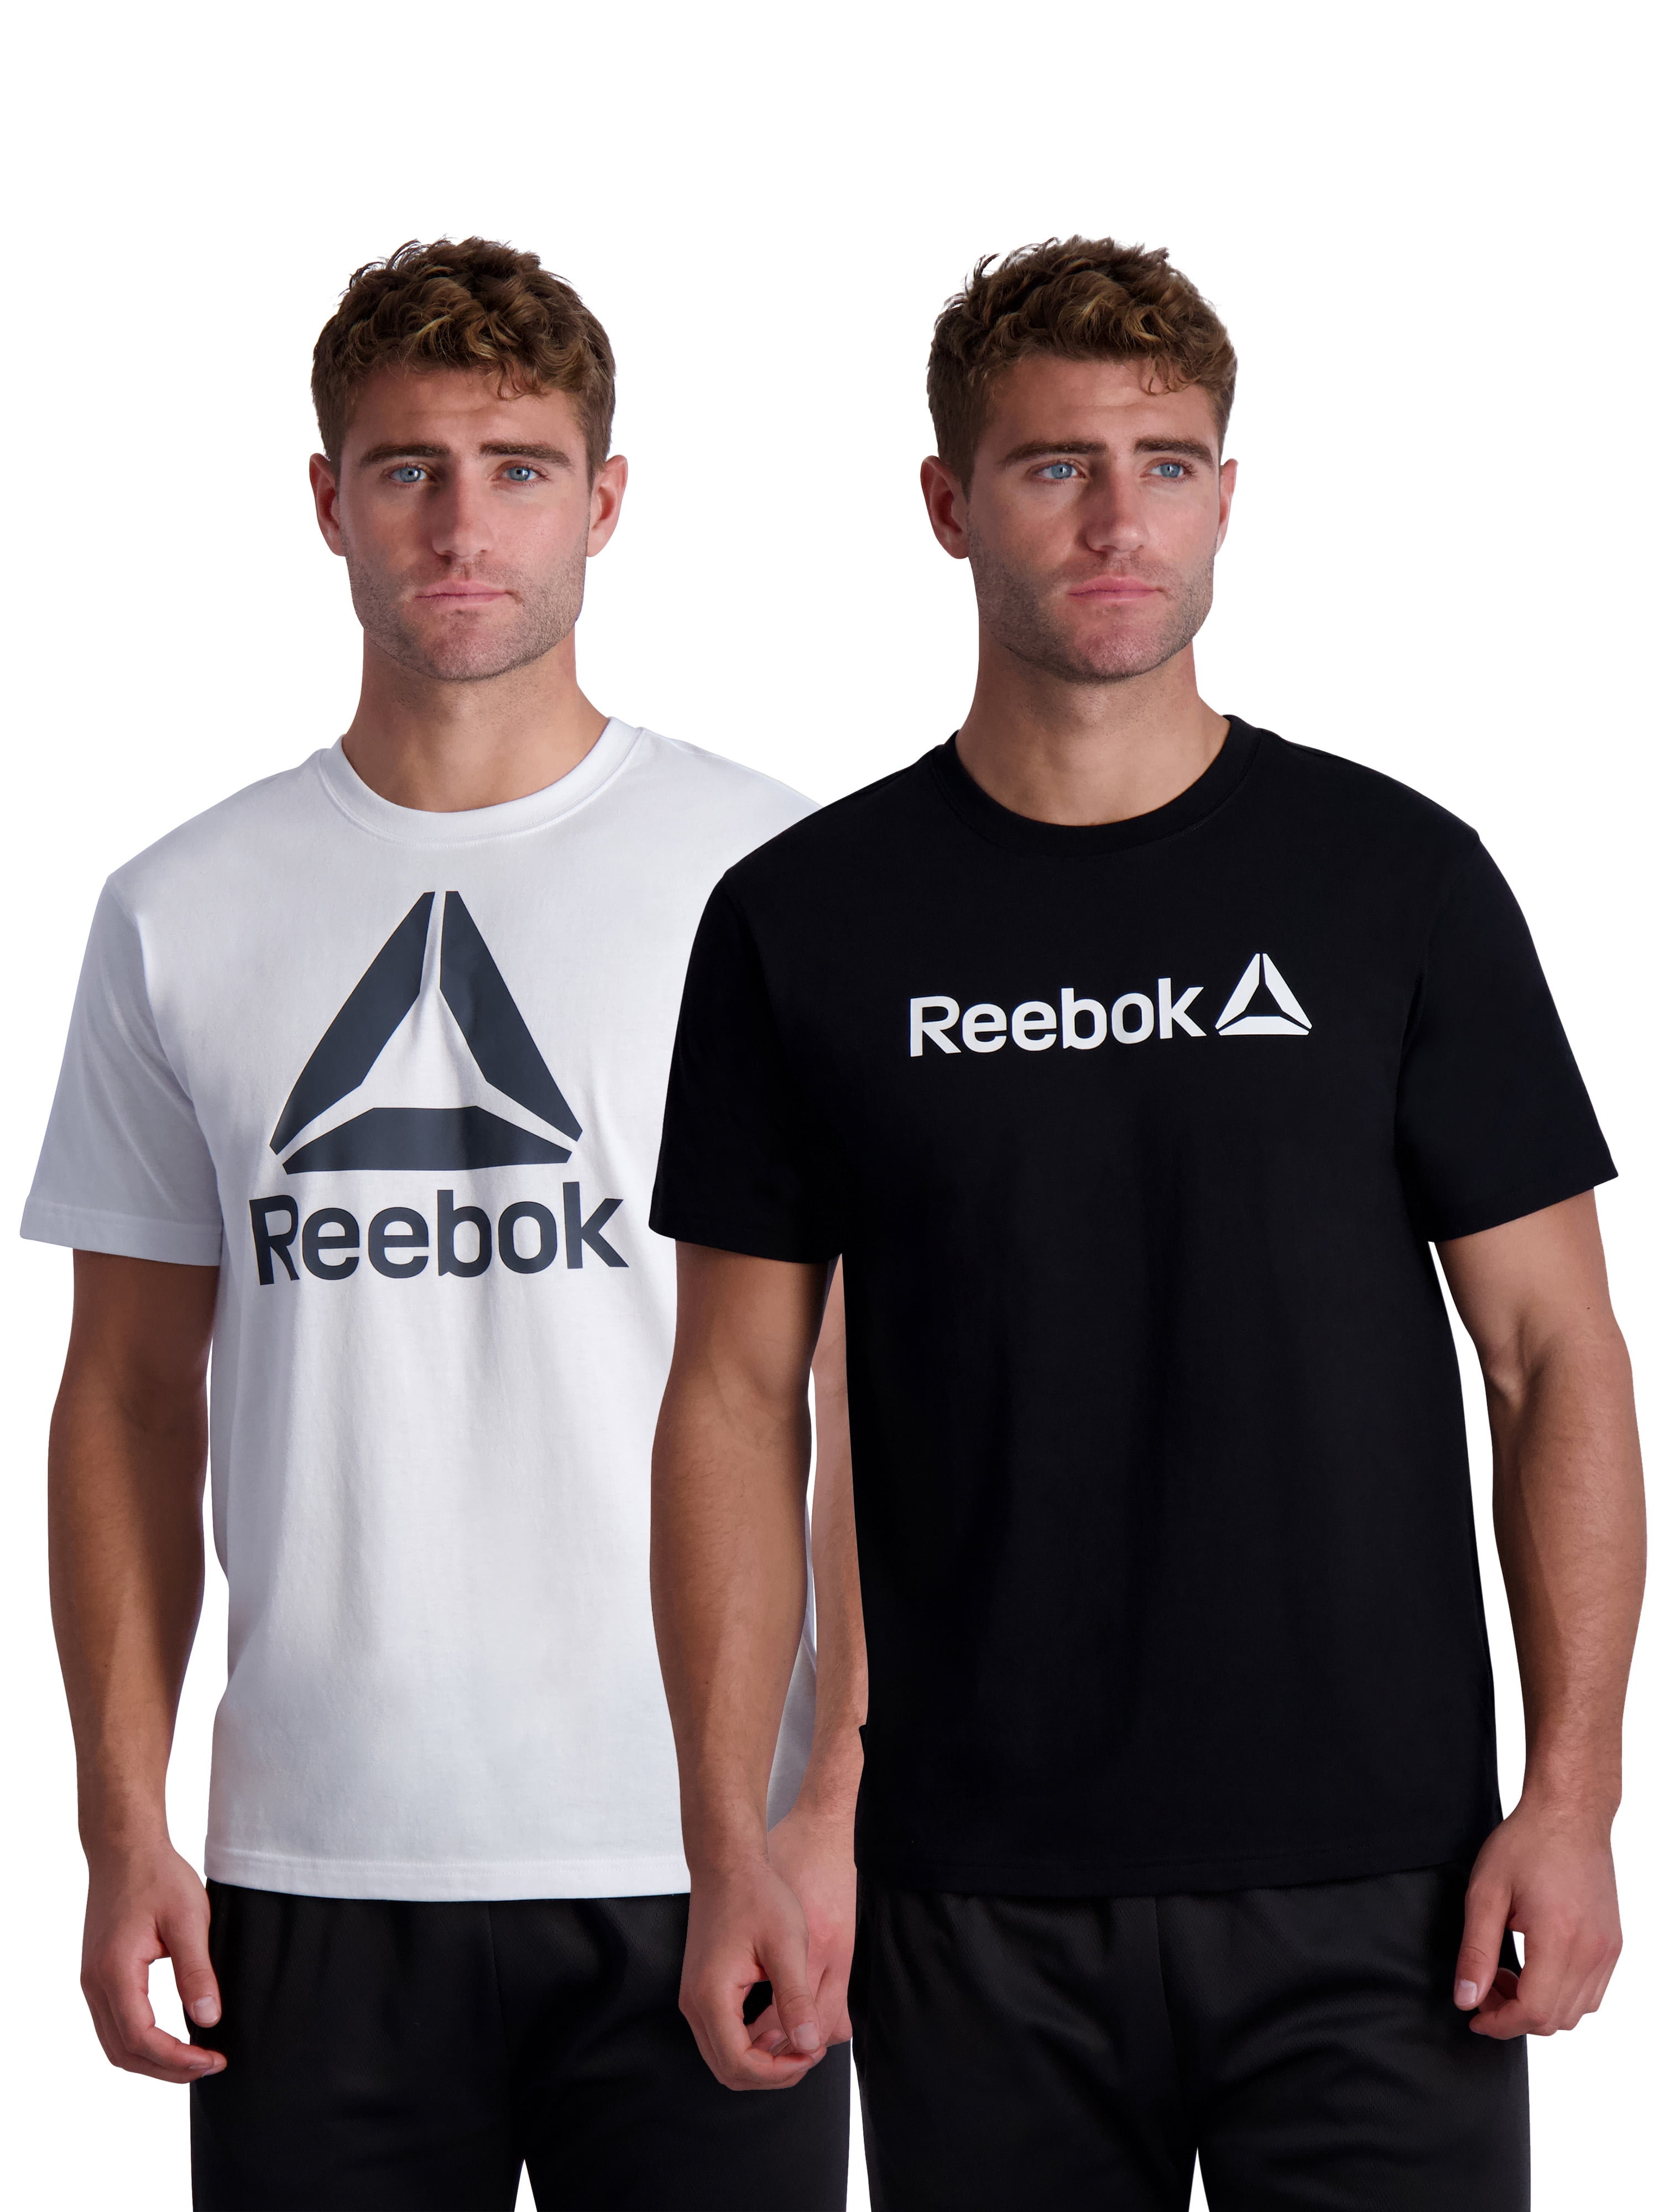 Reebok Men's Performance T-Shirt up to Size 3XL